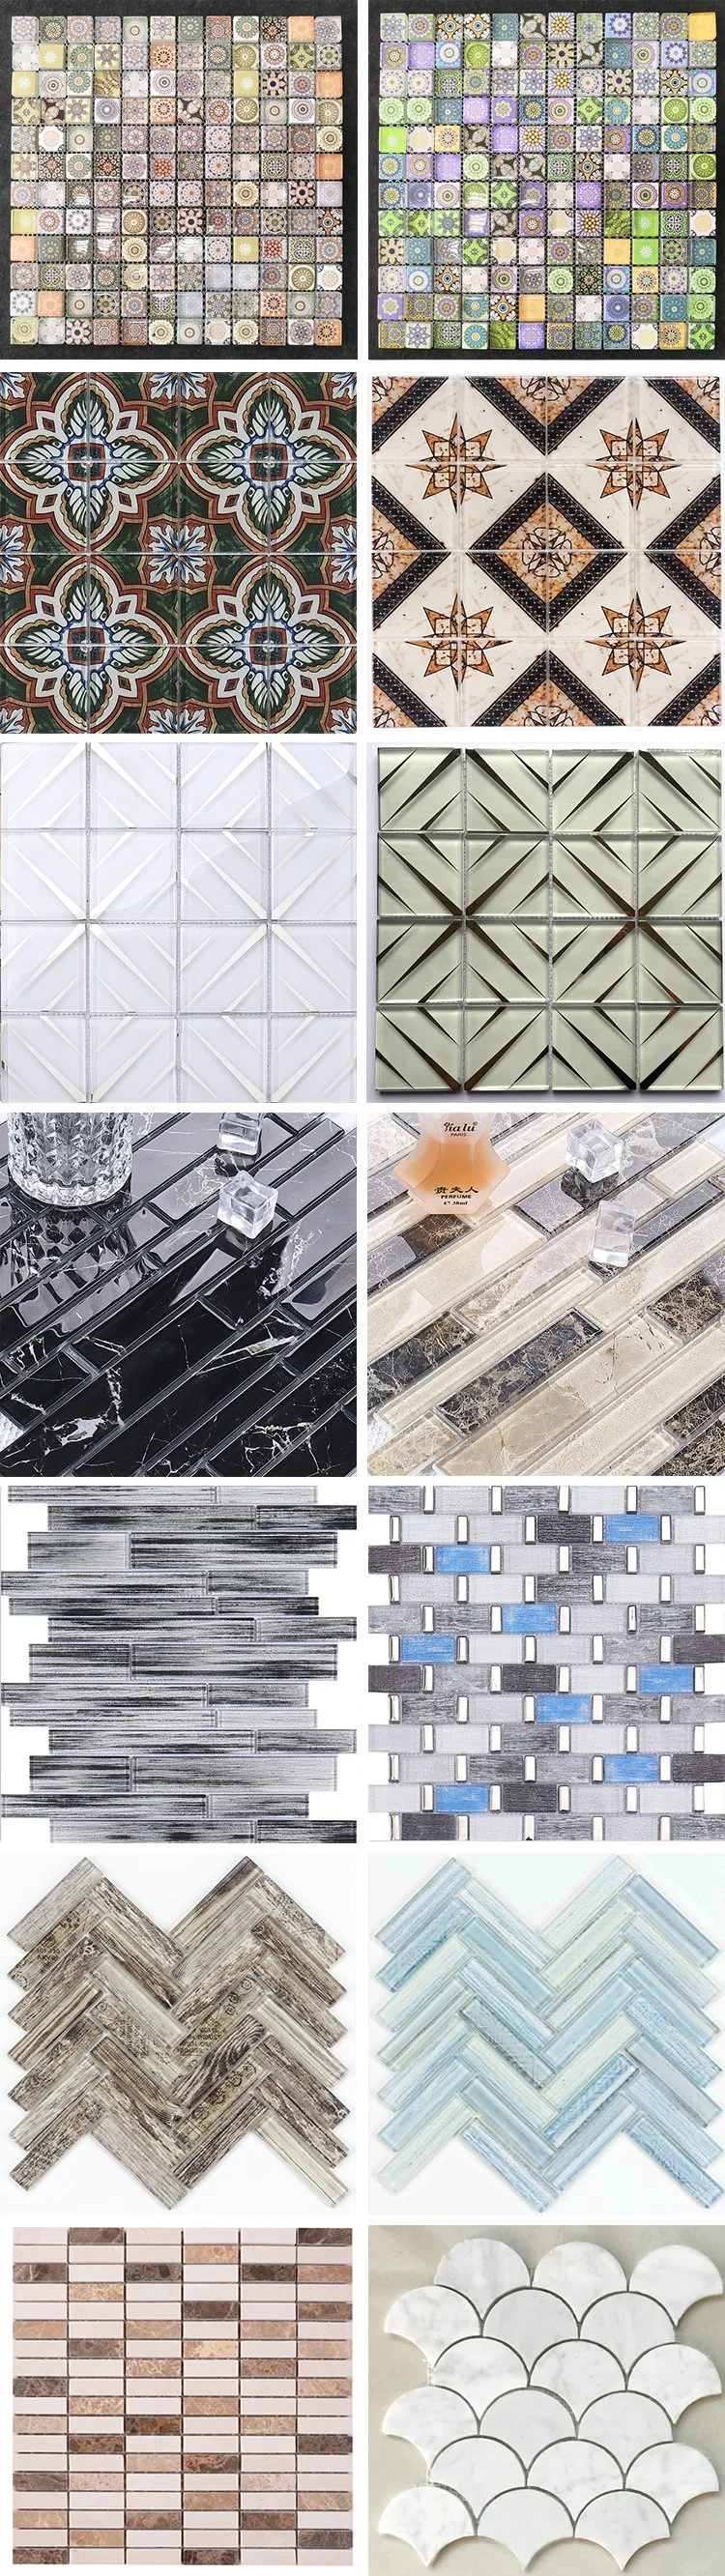 China Kitchen Crystal Tiles Wall Metallic Glass Mosaic Tile for Kitchen Backsplash